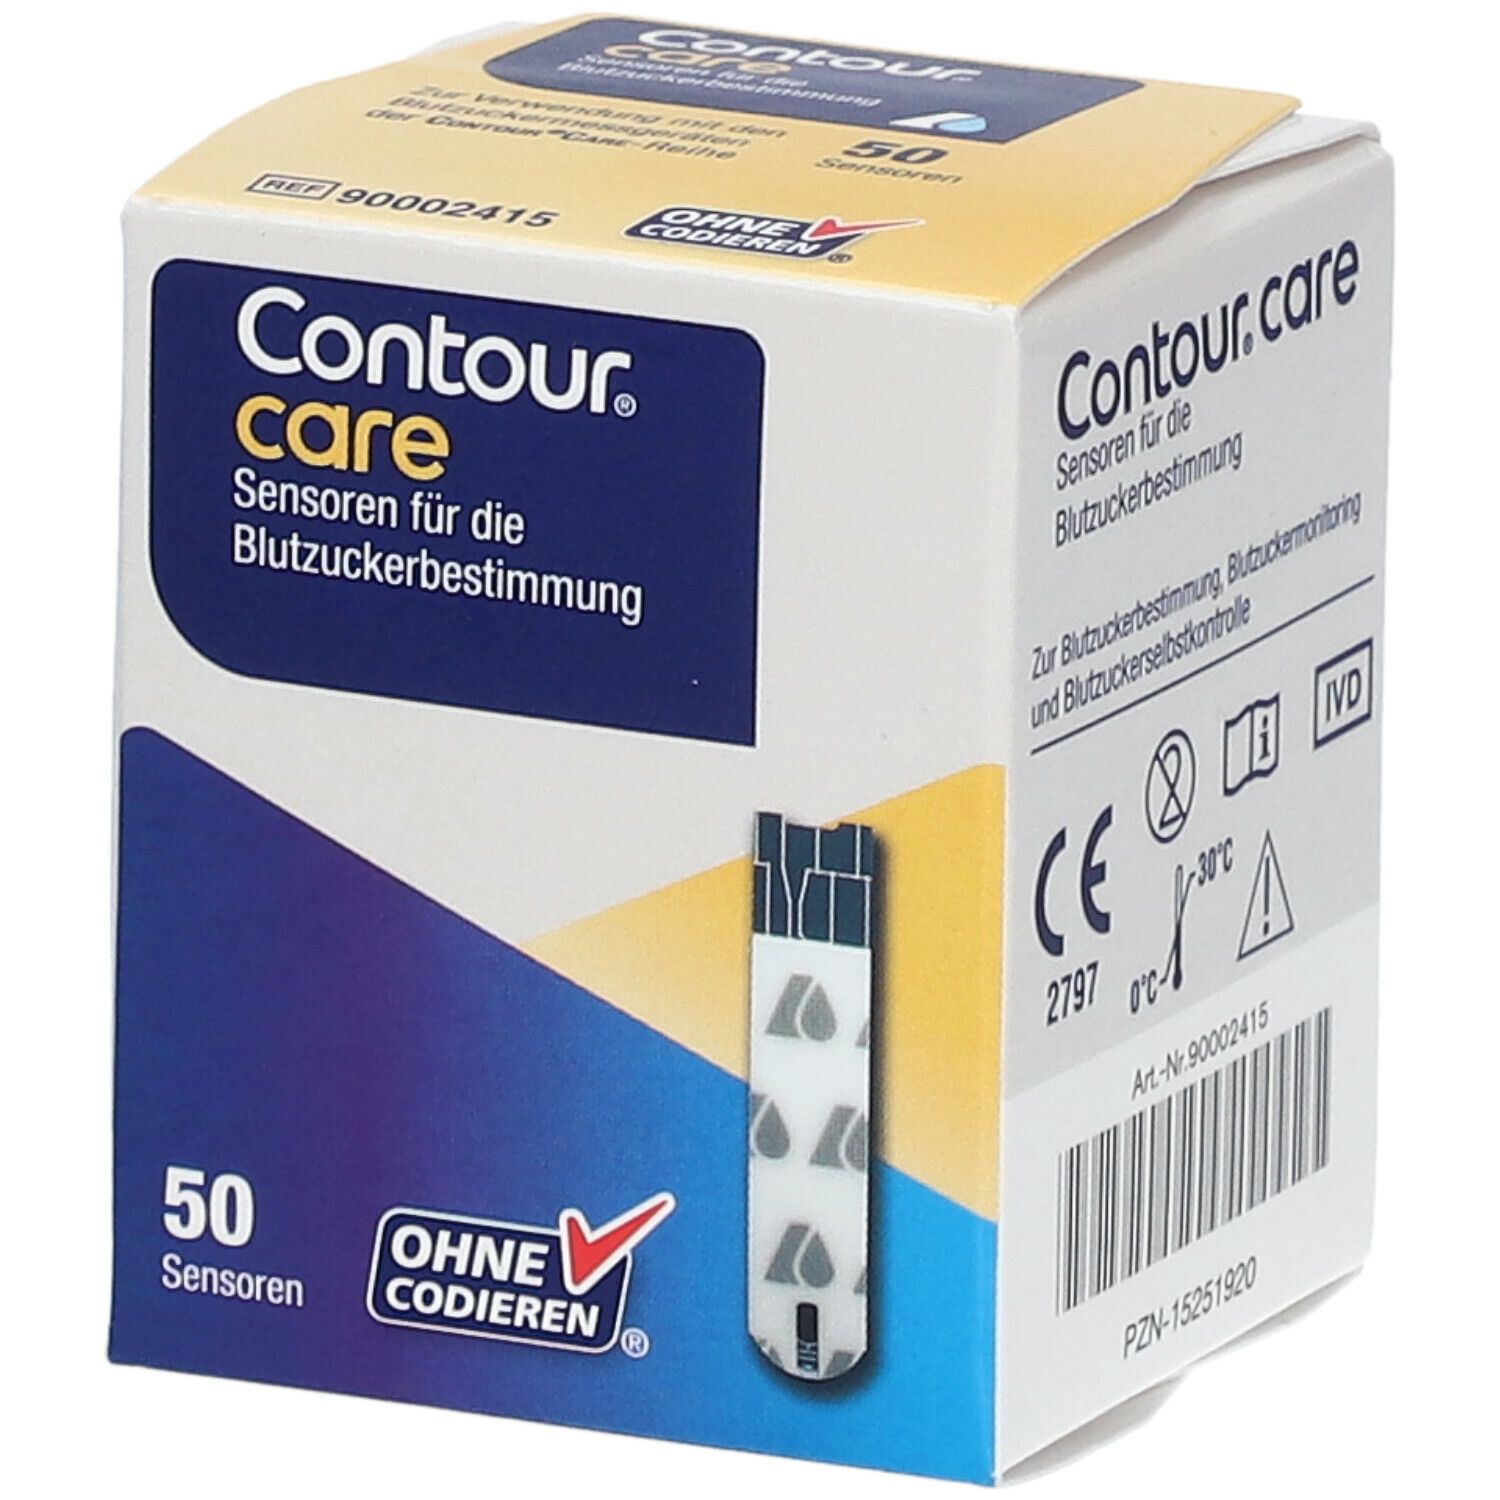 Contour ® Care sensors